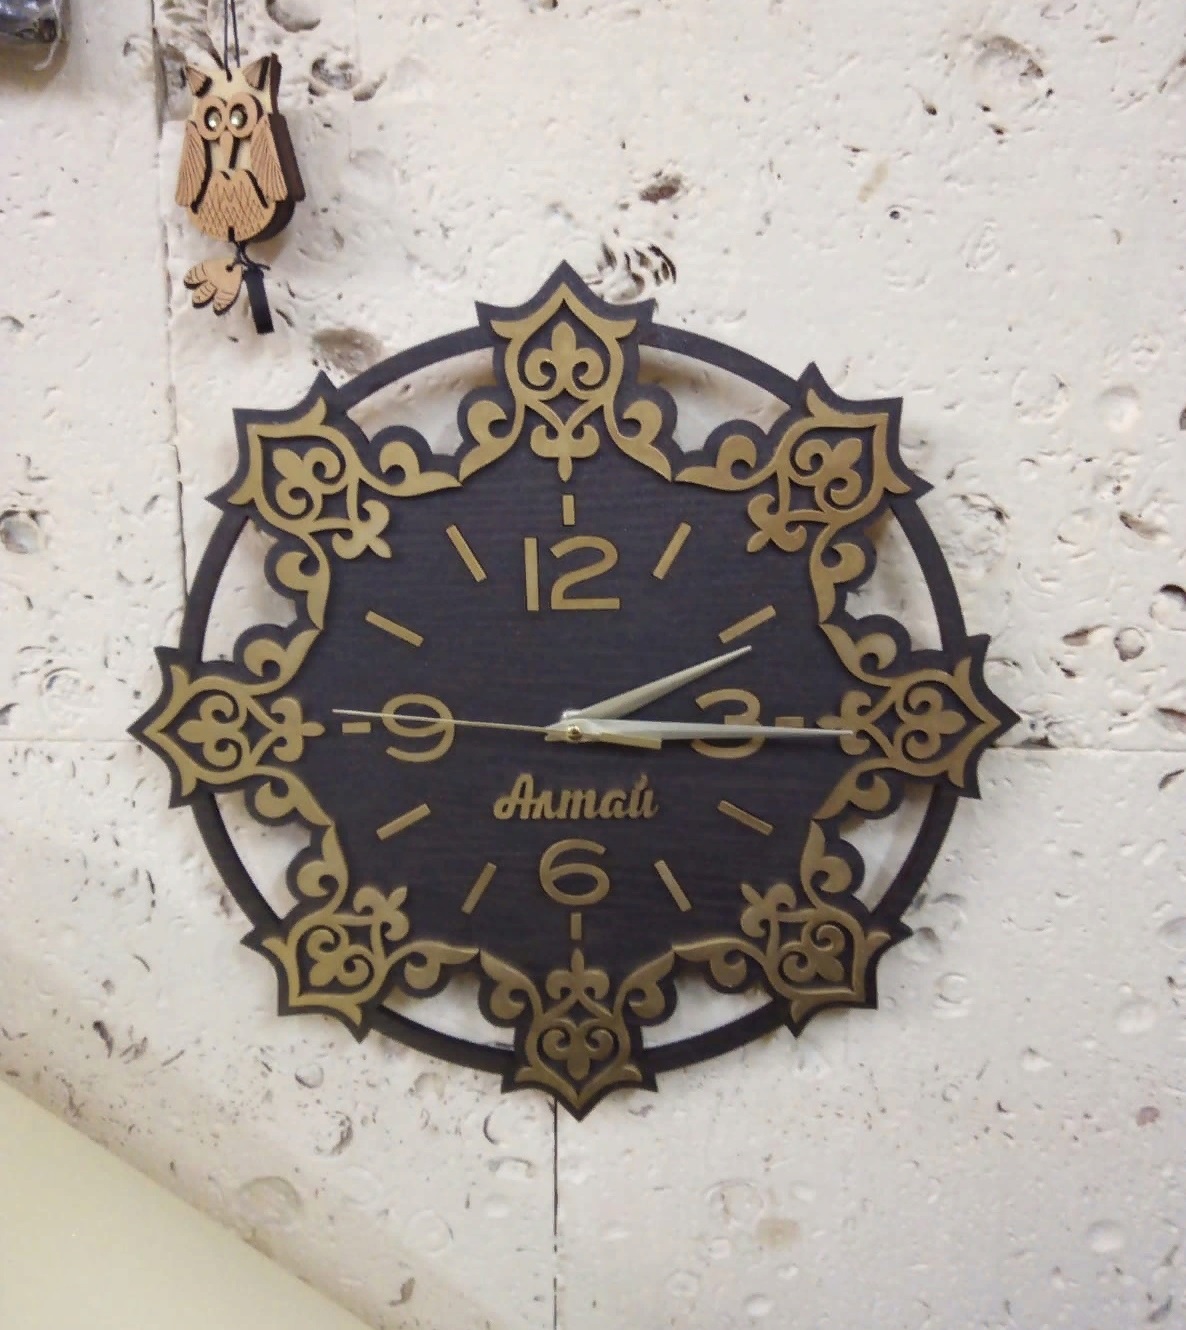 Reloj de pared de madera con decoración cortada con láser